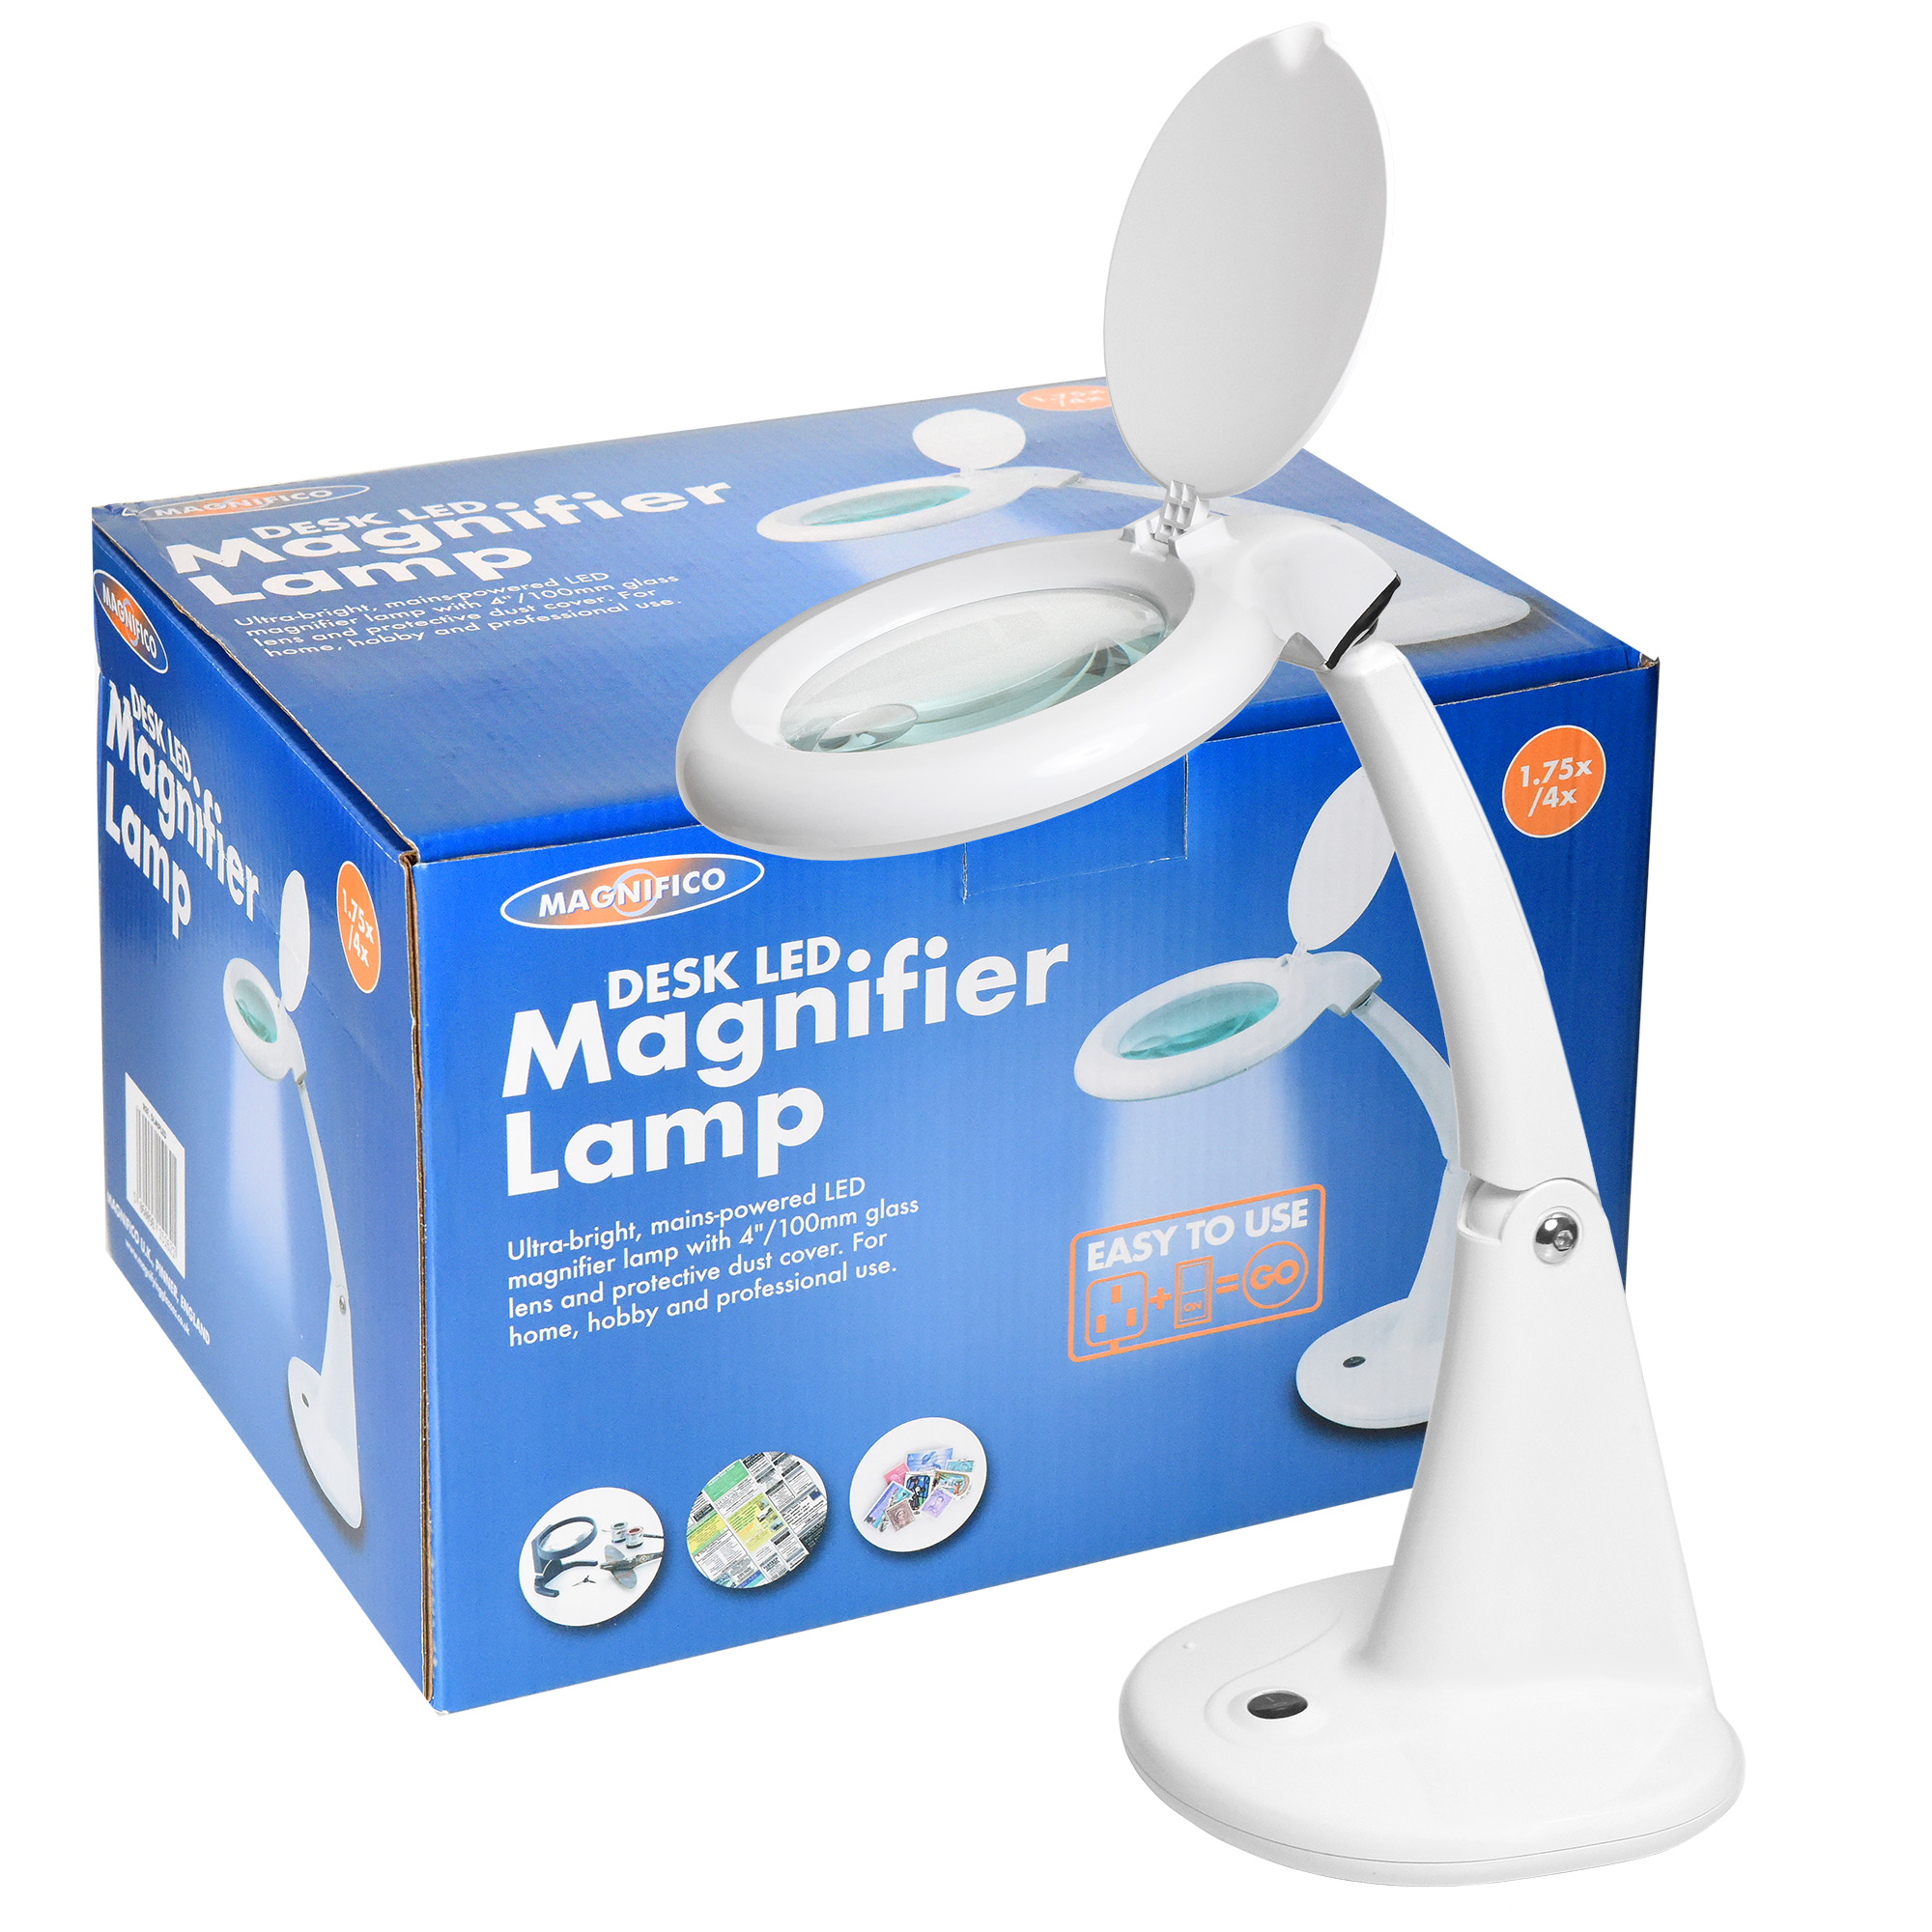 5. LED there be light - Desktop LED Magnifier Lamp  (UK only)